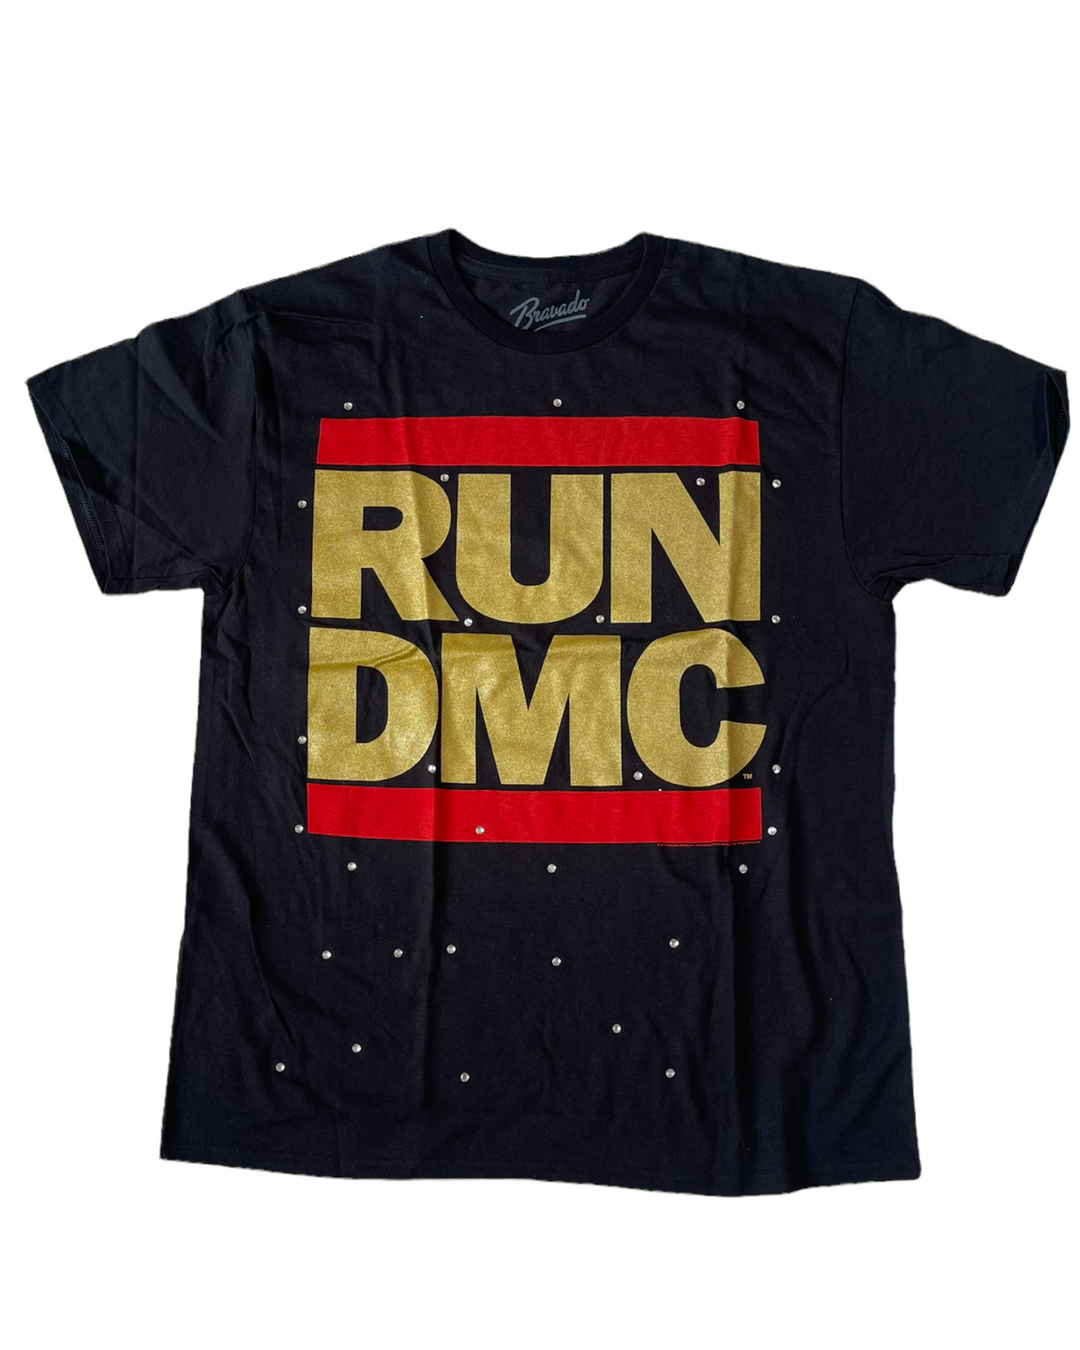 Run DMC Rhinestone T-Shirt